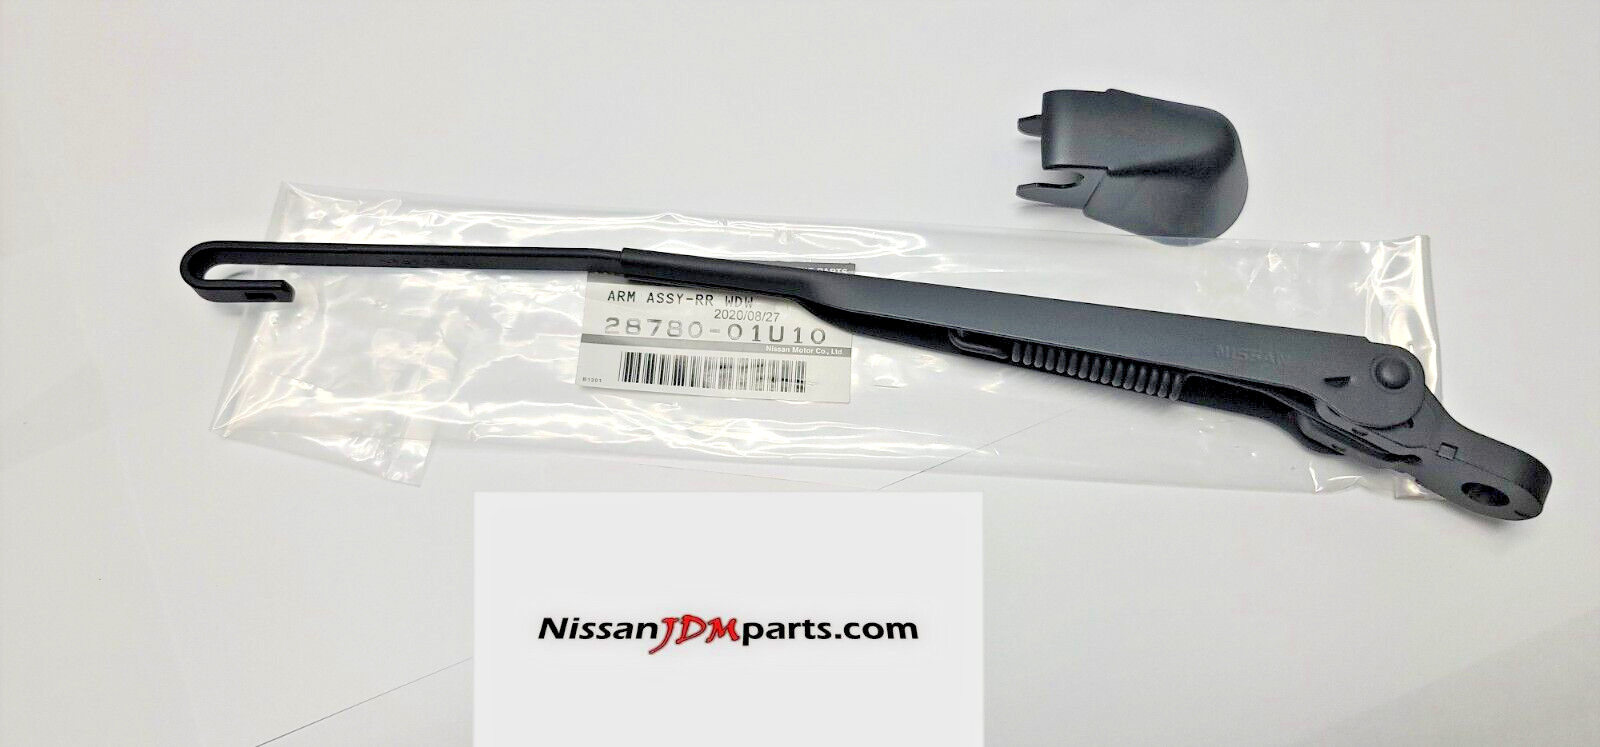 Genuine Nissan Skyline Rear Wiper Assembly for R32 GTR GTS-4 GTST 28780-01U10